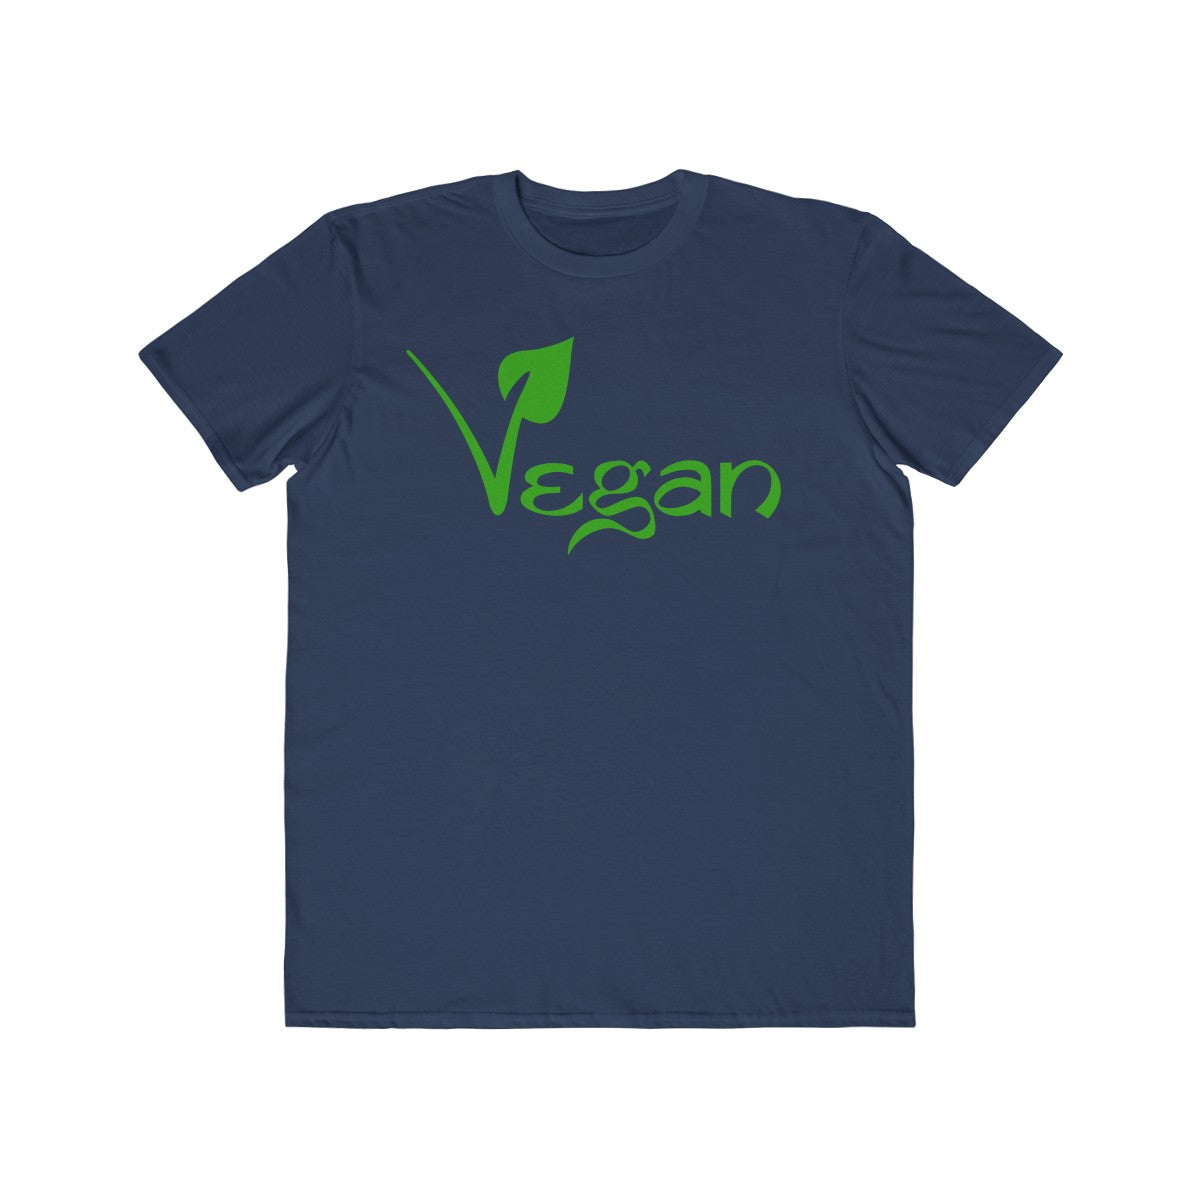 Vegan Men's Lightweight Fashion Tee